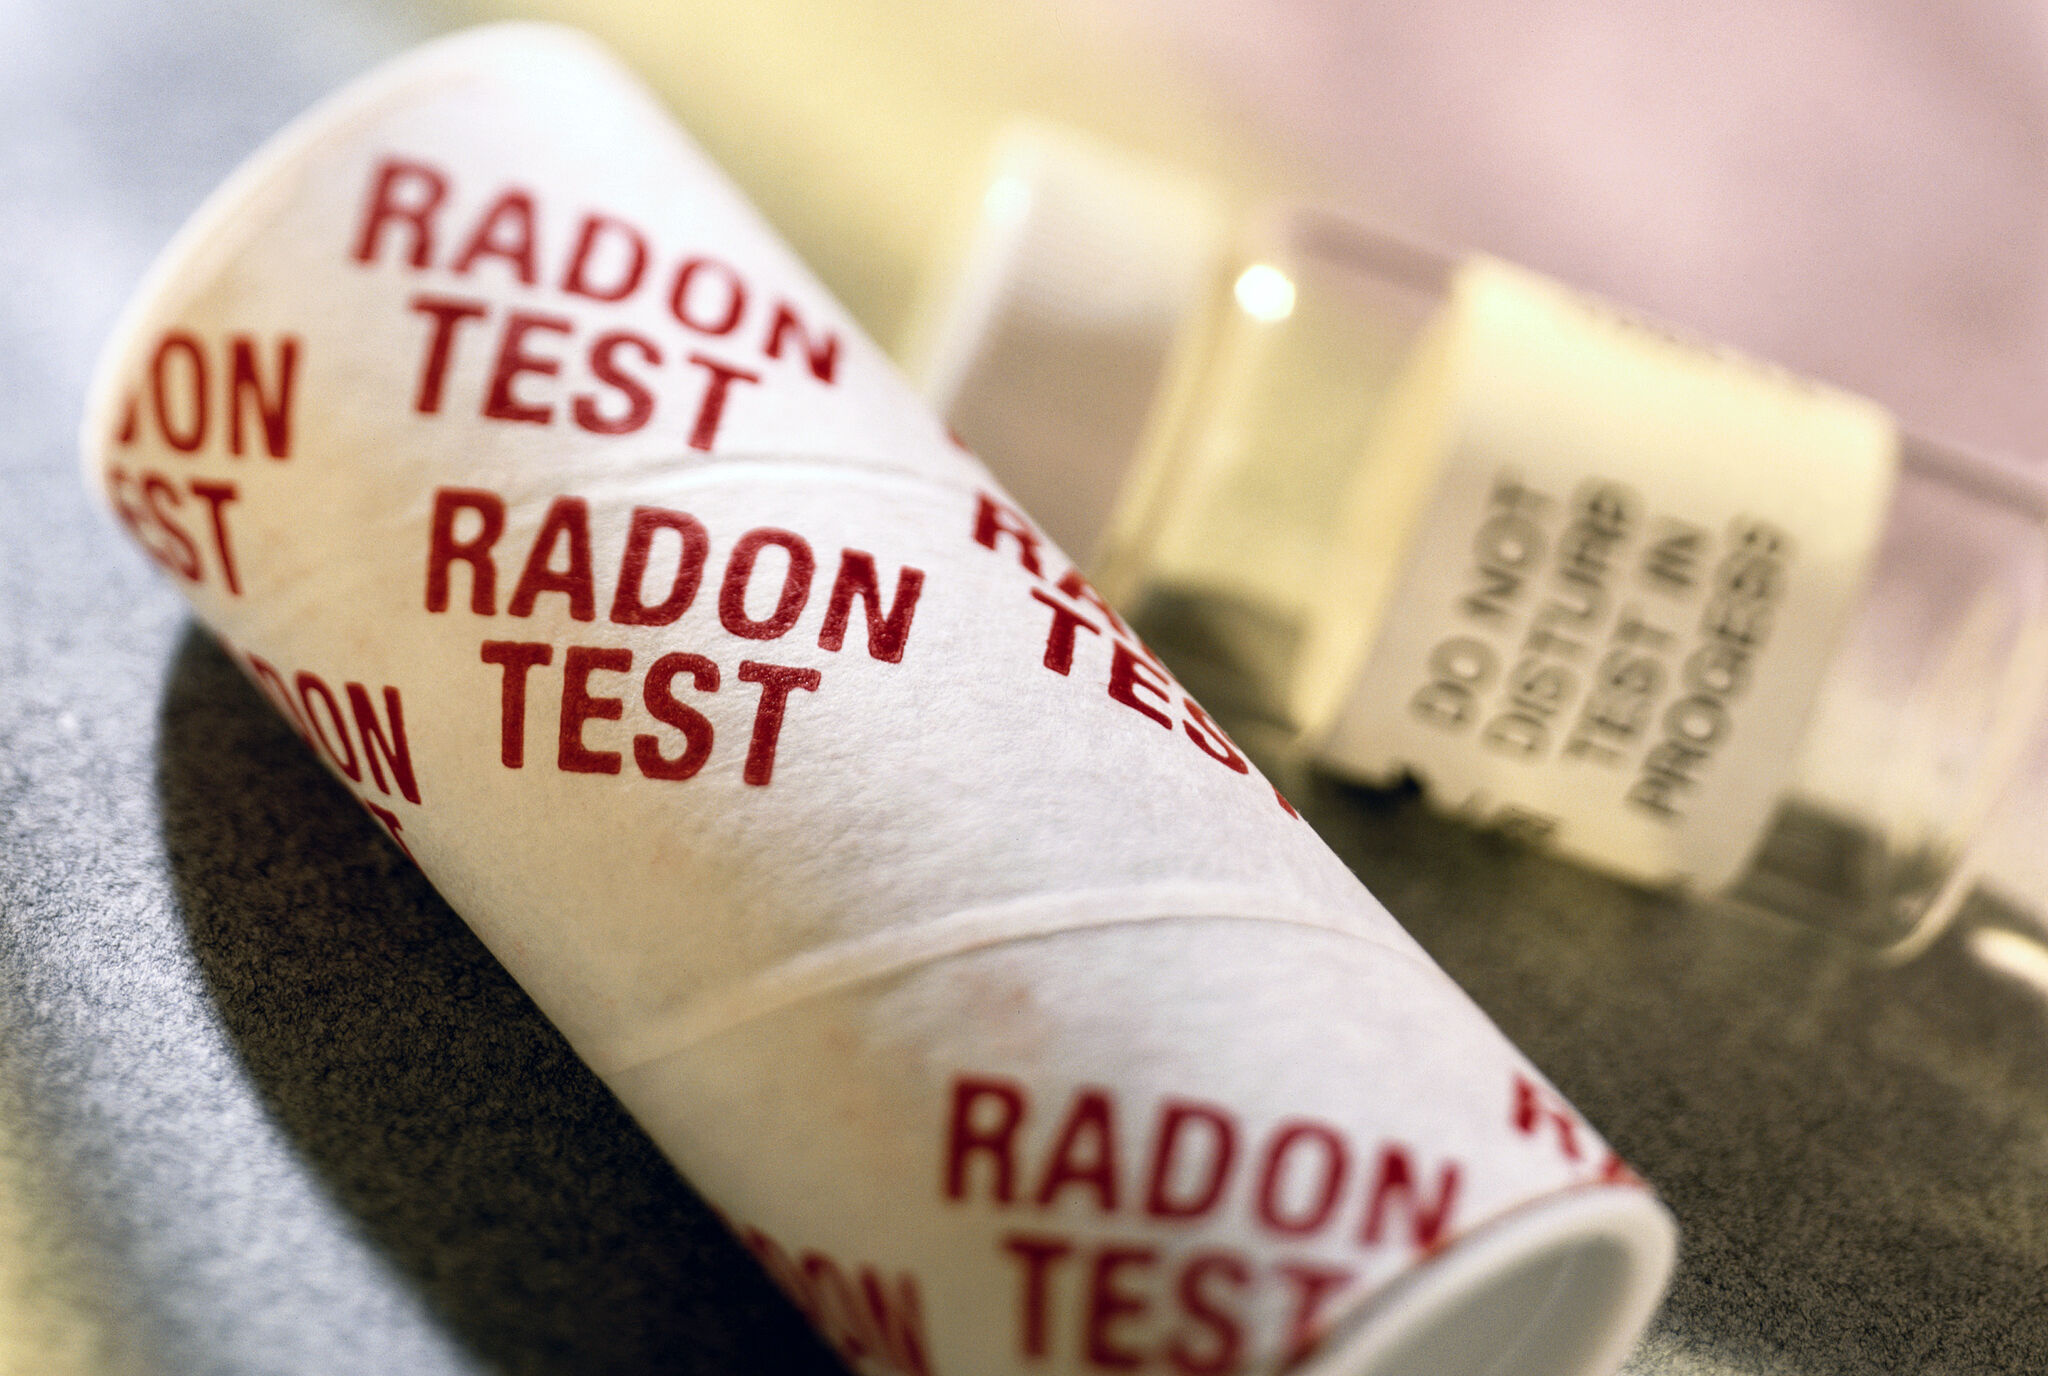 uses of radon